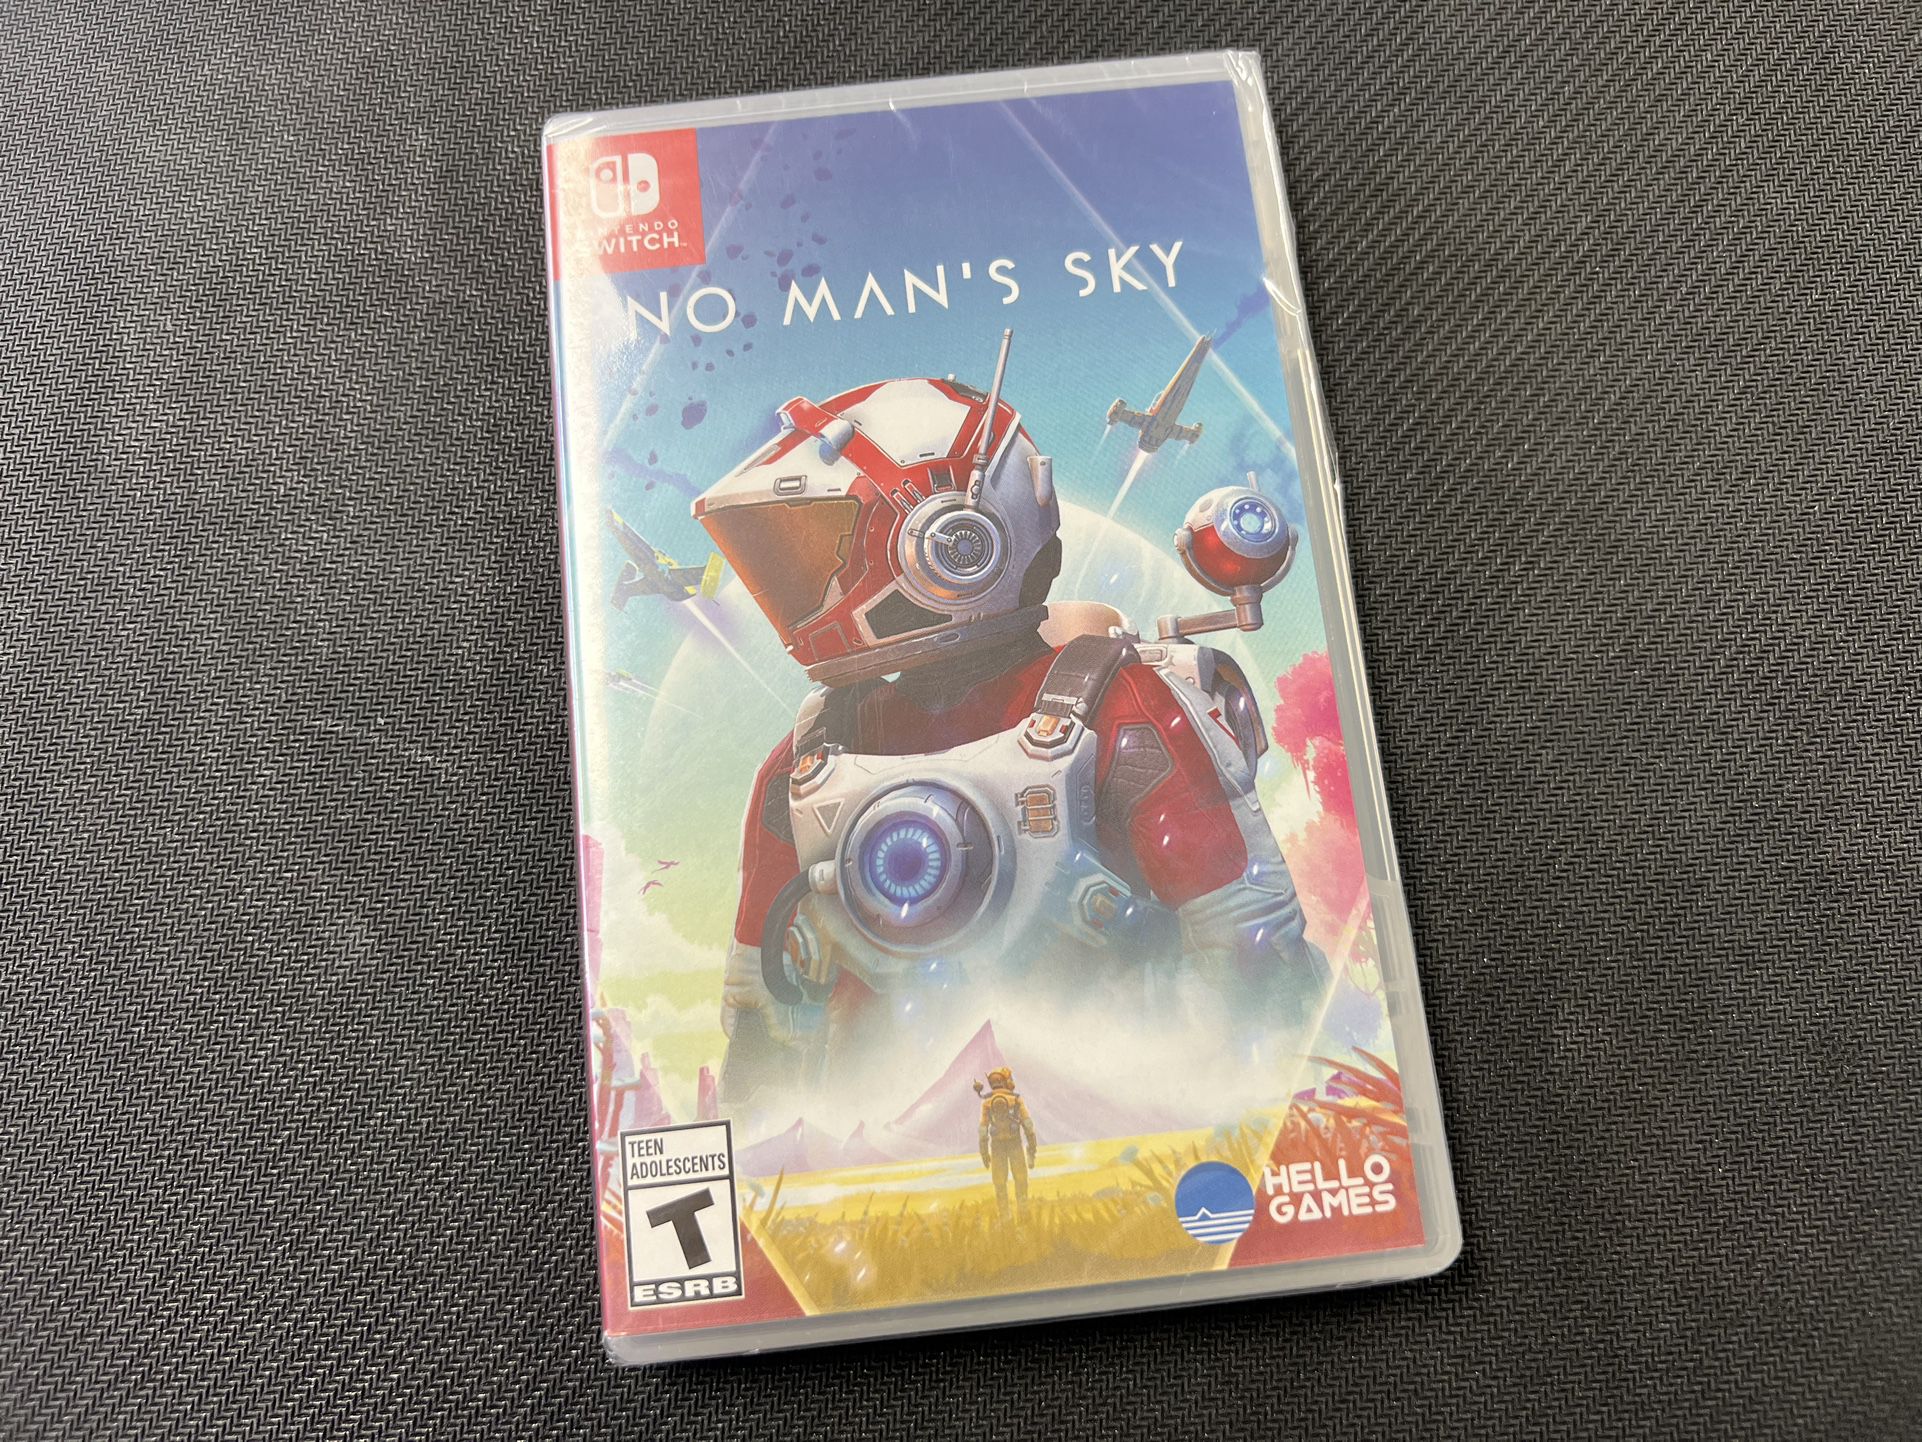 No Man's Sky - Nintendo Switch NEW!